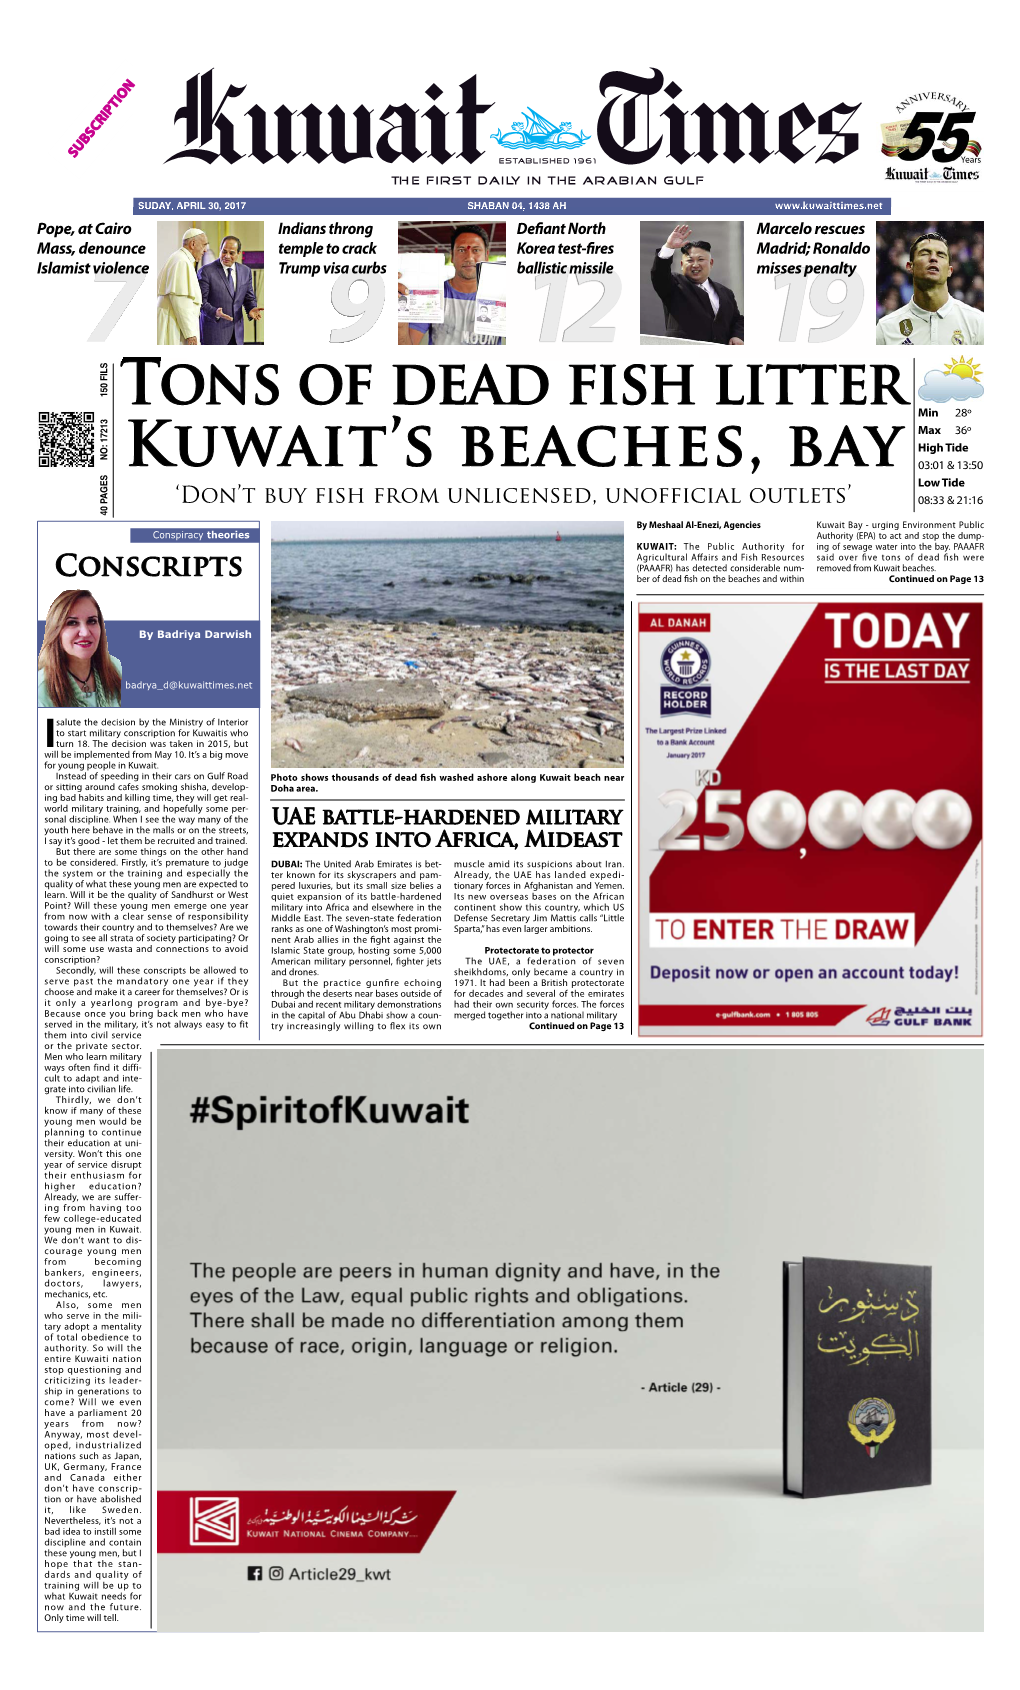 Tons of Dead Fish Litter Kuwait's Beaches